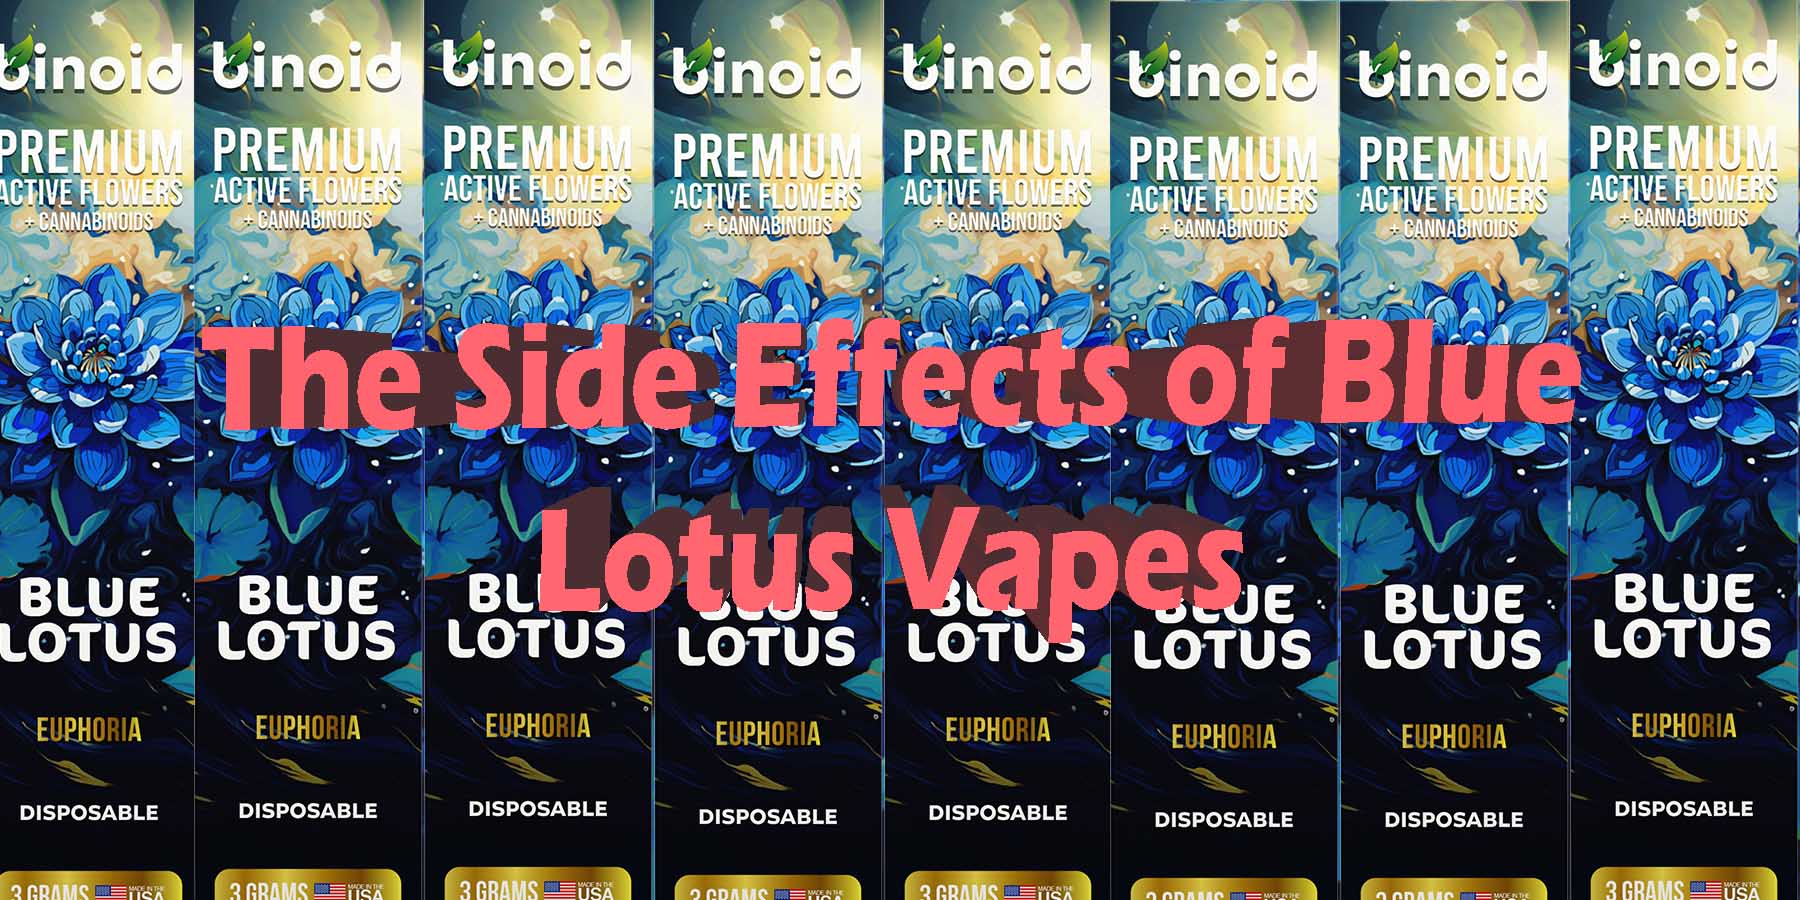 The Side Effects of Blue Lotus Vapes Hemp Cannabinoids WhereToBuy HowToBuy Strongest GoodHigh New Mushrooms GoodPrice Bounce Binoid